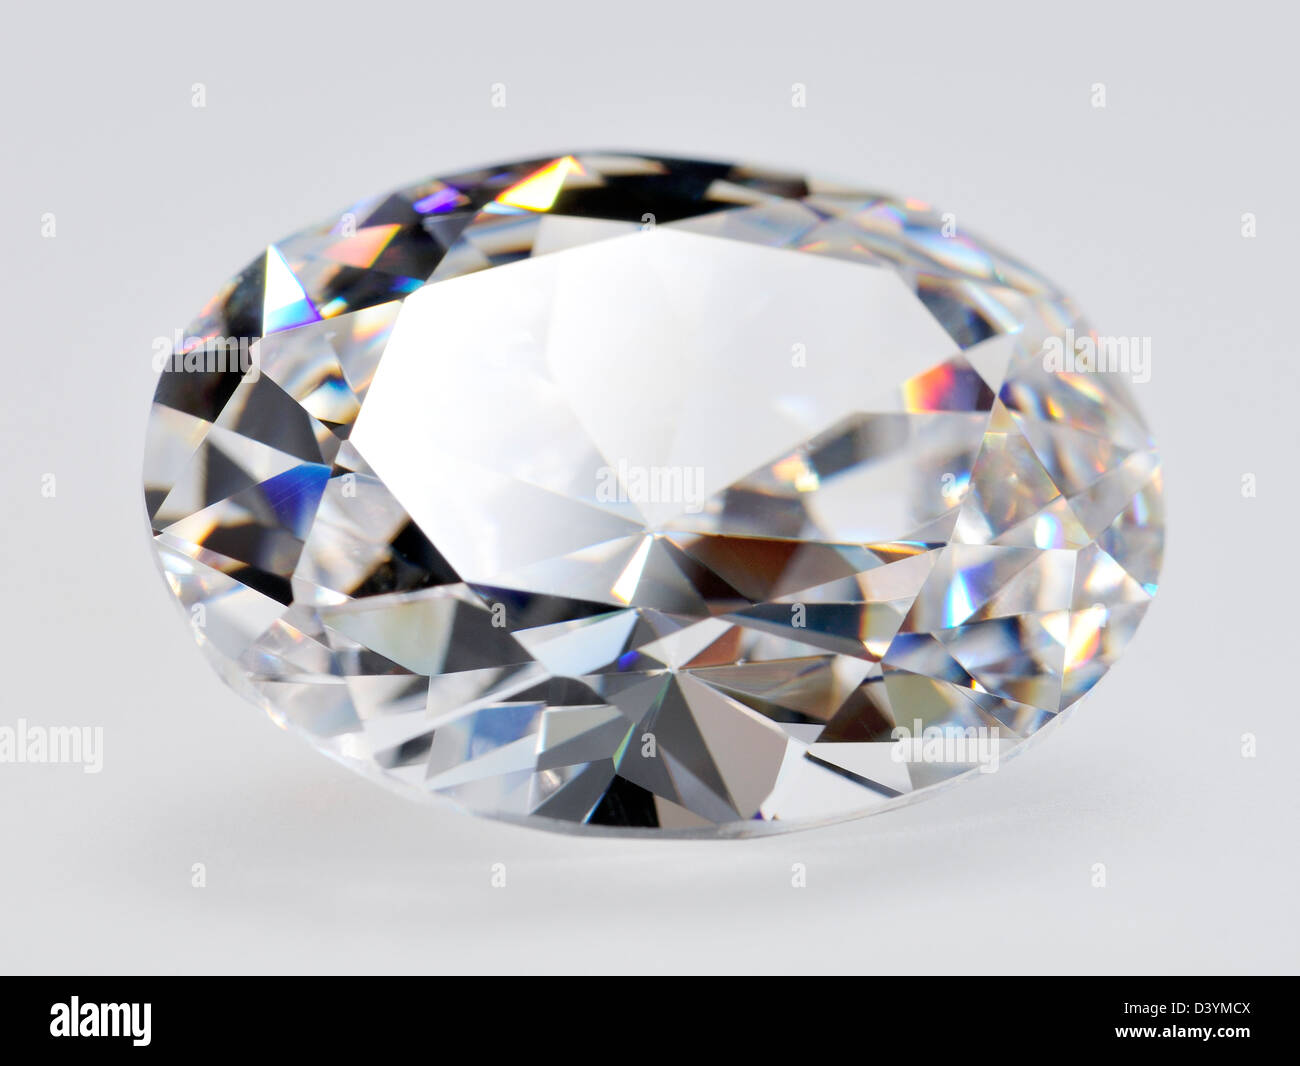 Oval-cut Diamond (synthetic - cubic zirconia) Stock Photo